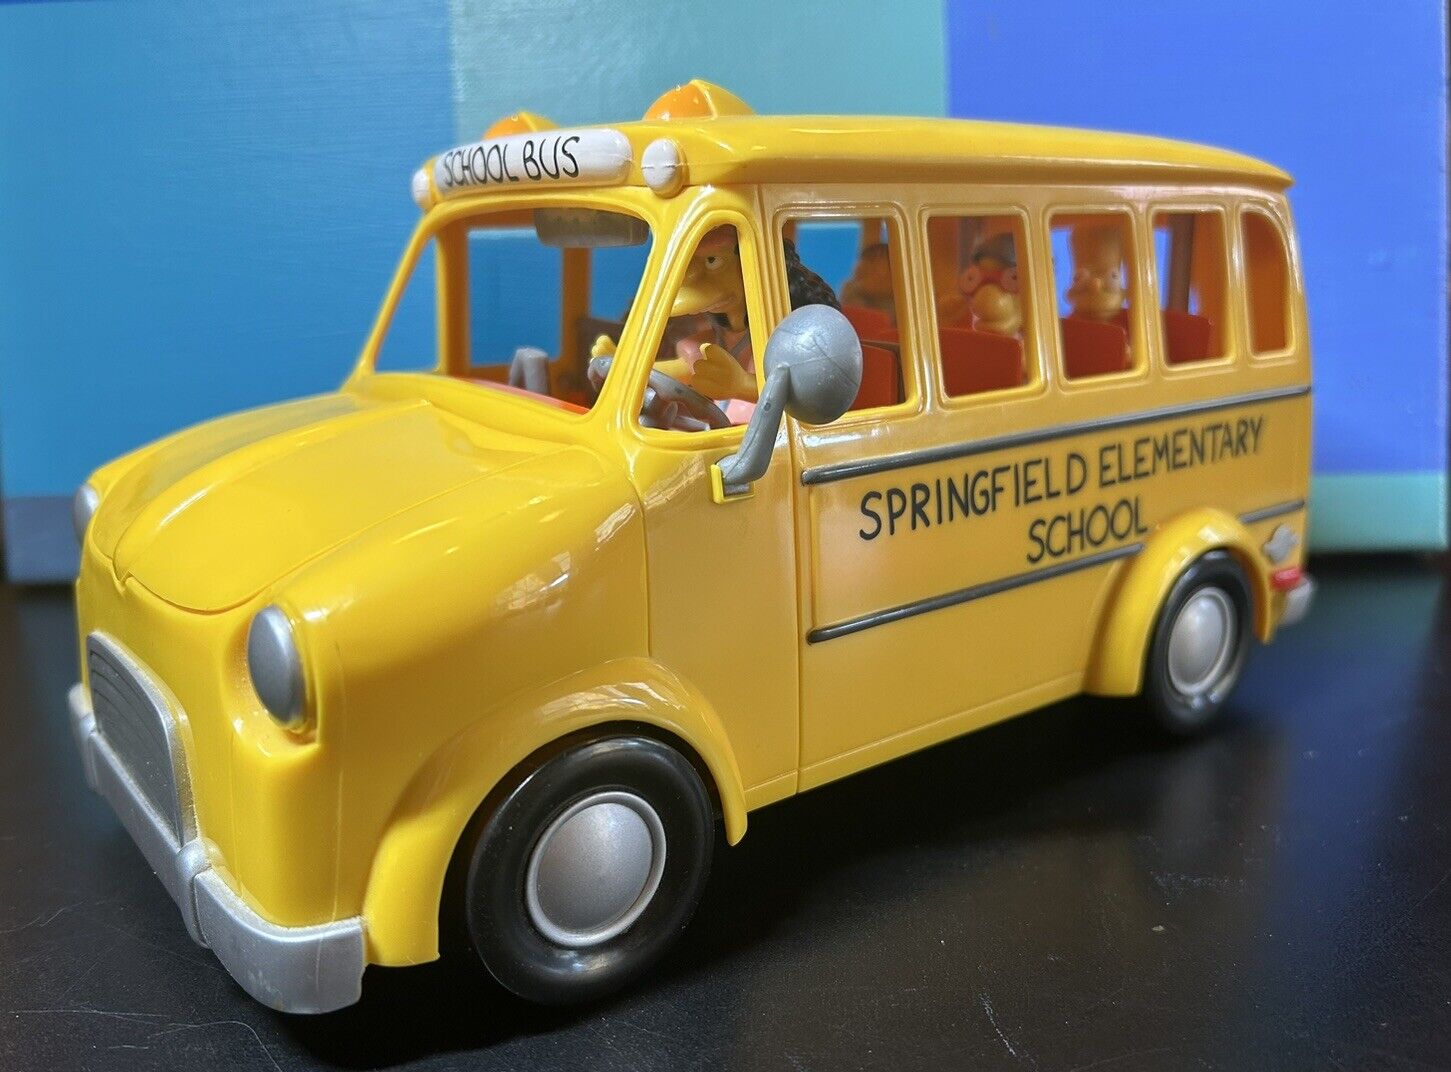 The Simpsons World Of Springfield Elementary School Bus Playmates 2002